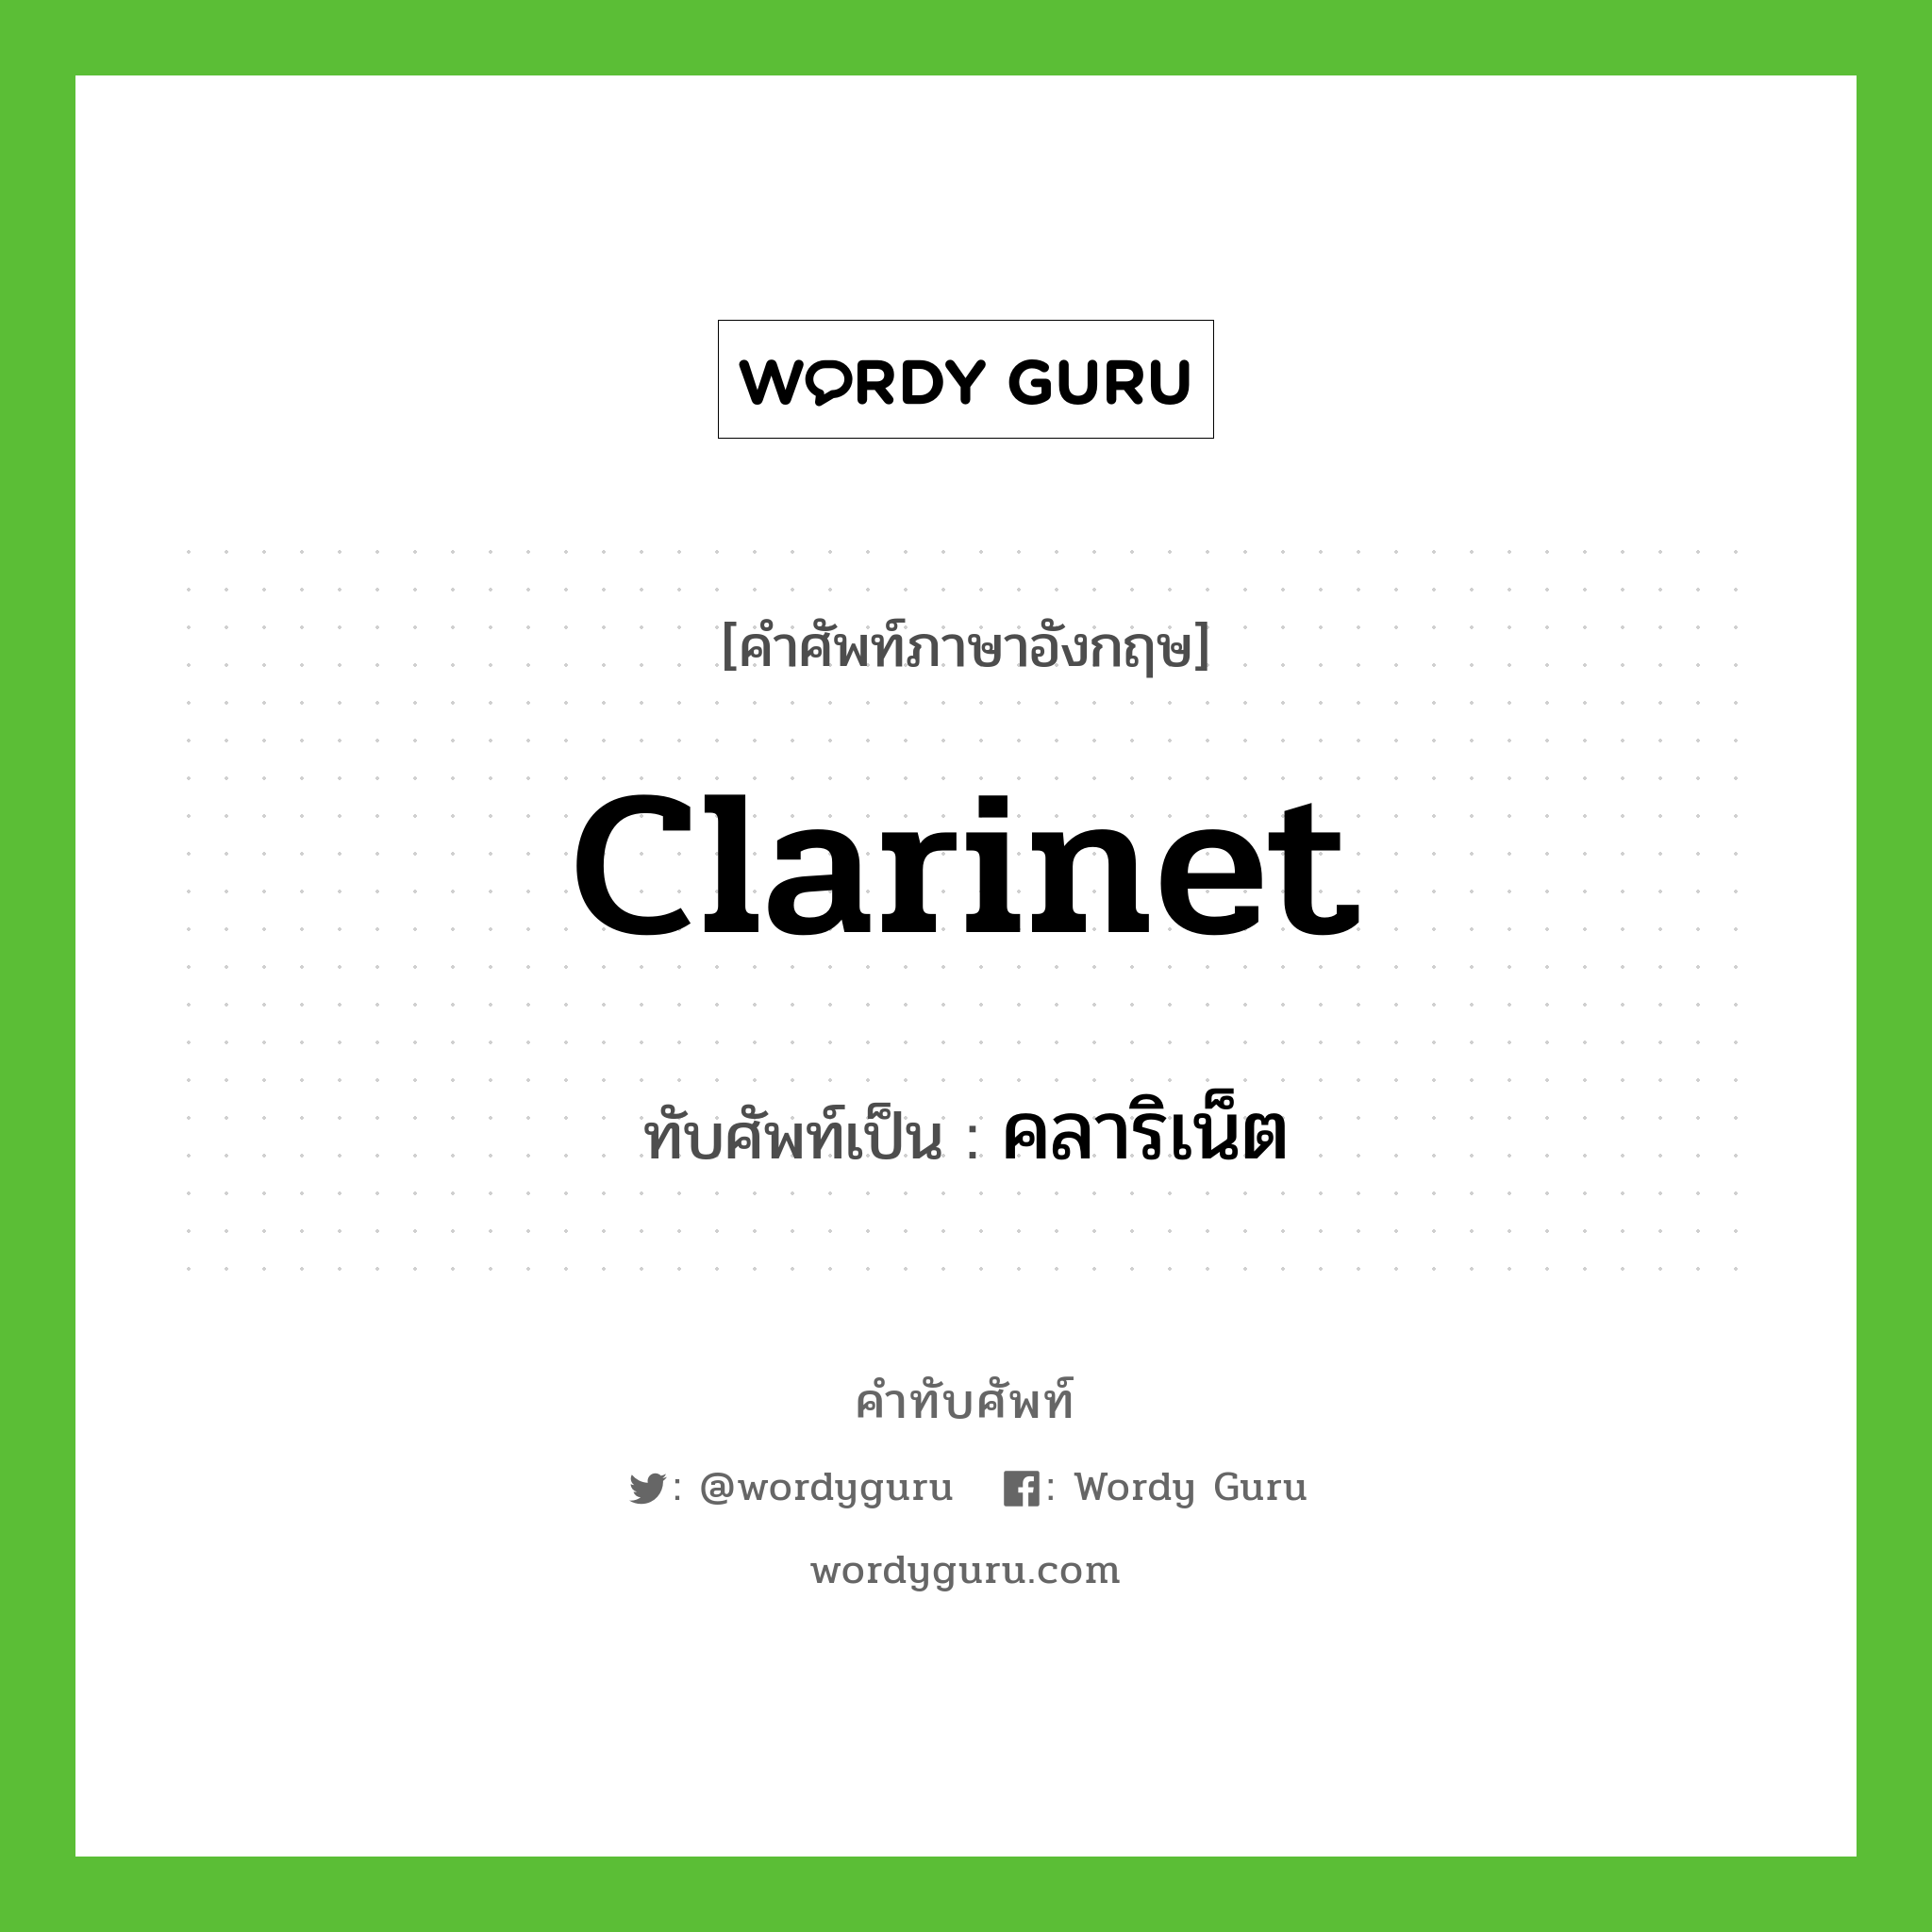 clarinet เขียนเป็นคำไทยว่าอะไร?, คำศัพท์ภาษาอังกฤษ clarinet ทับศัพท์เป็น คลาริเน็ต